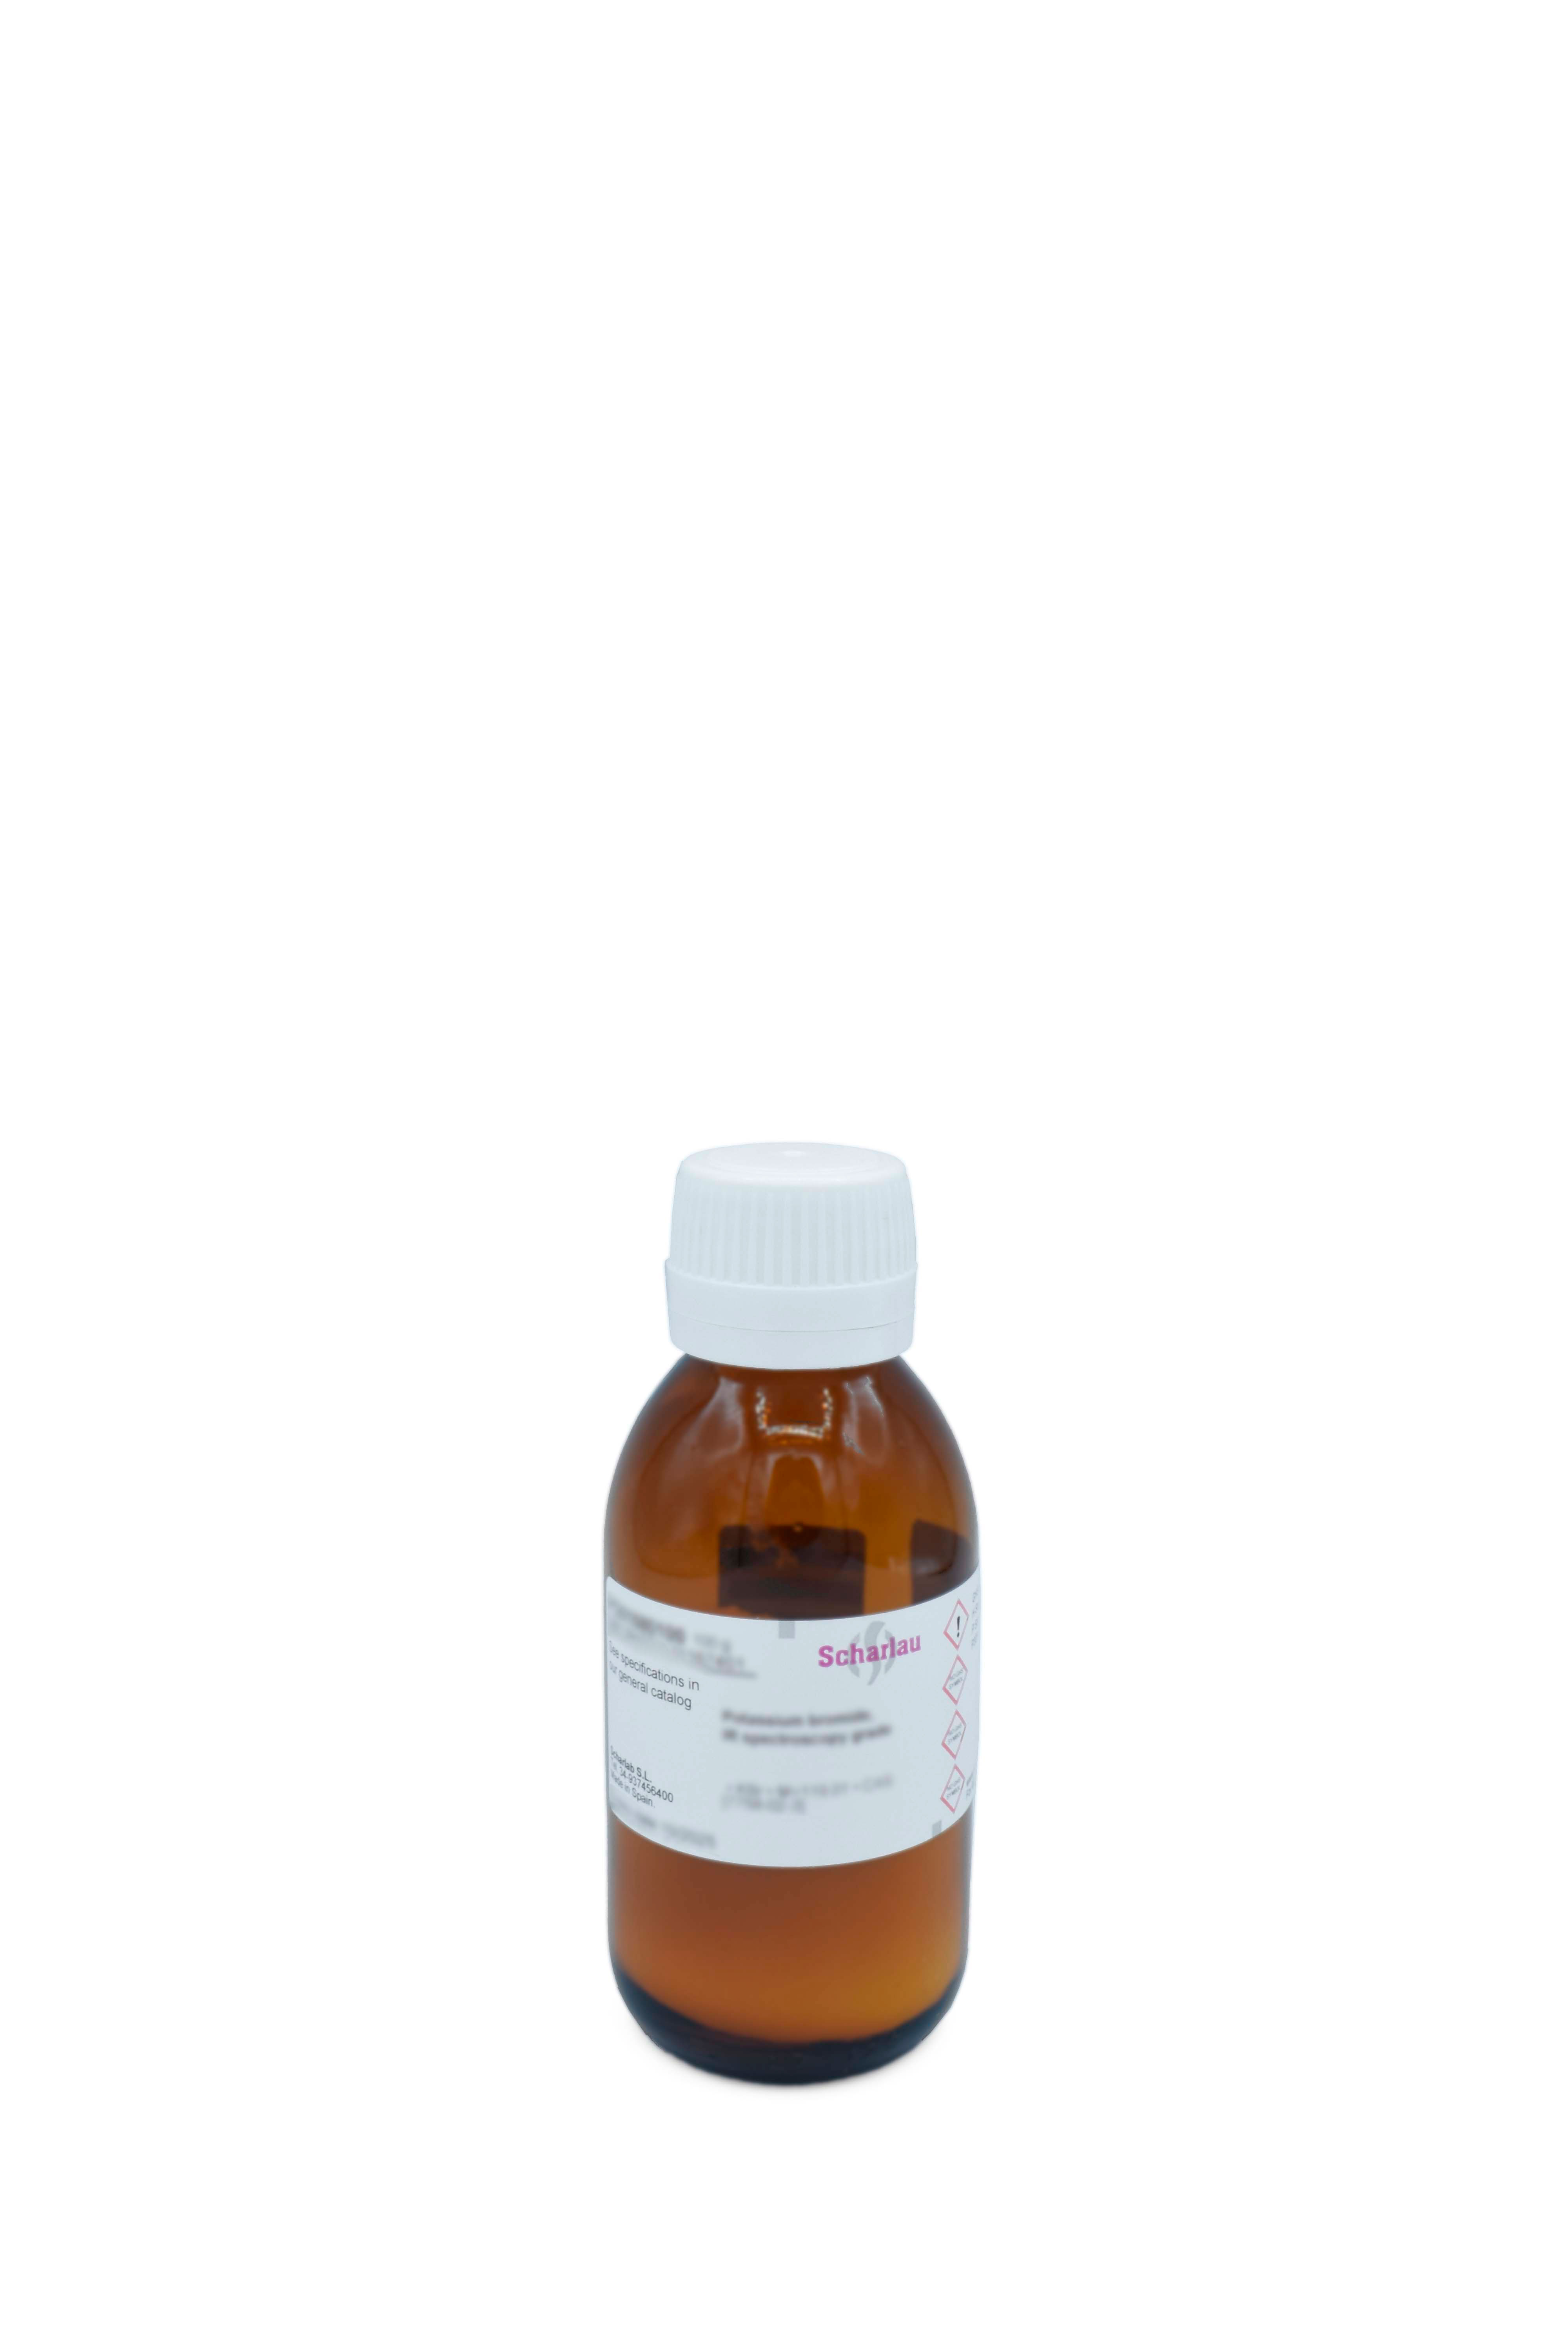 Carmine, C.I. 75470, for microscopy, Alum lacquer of carminic acid